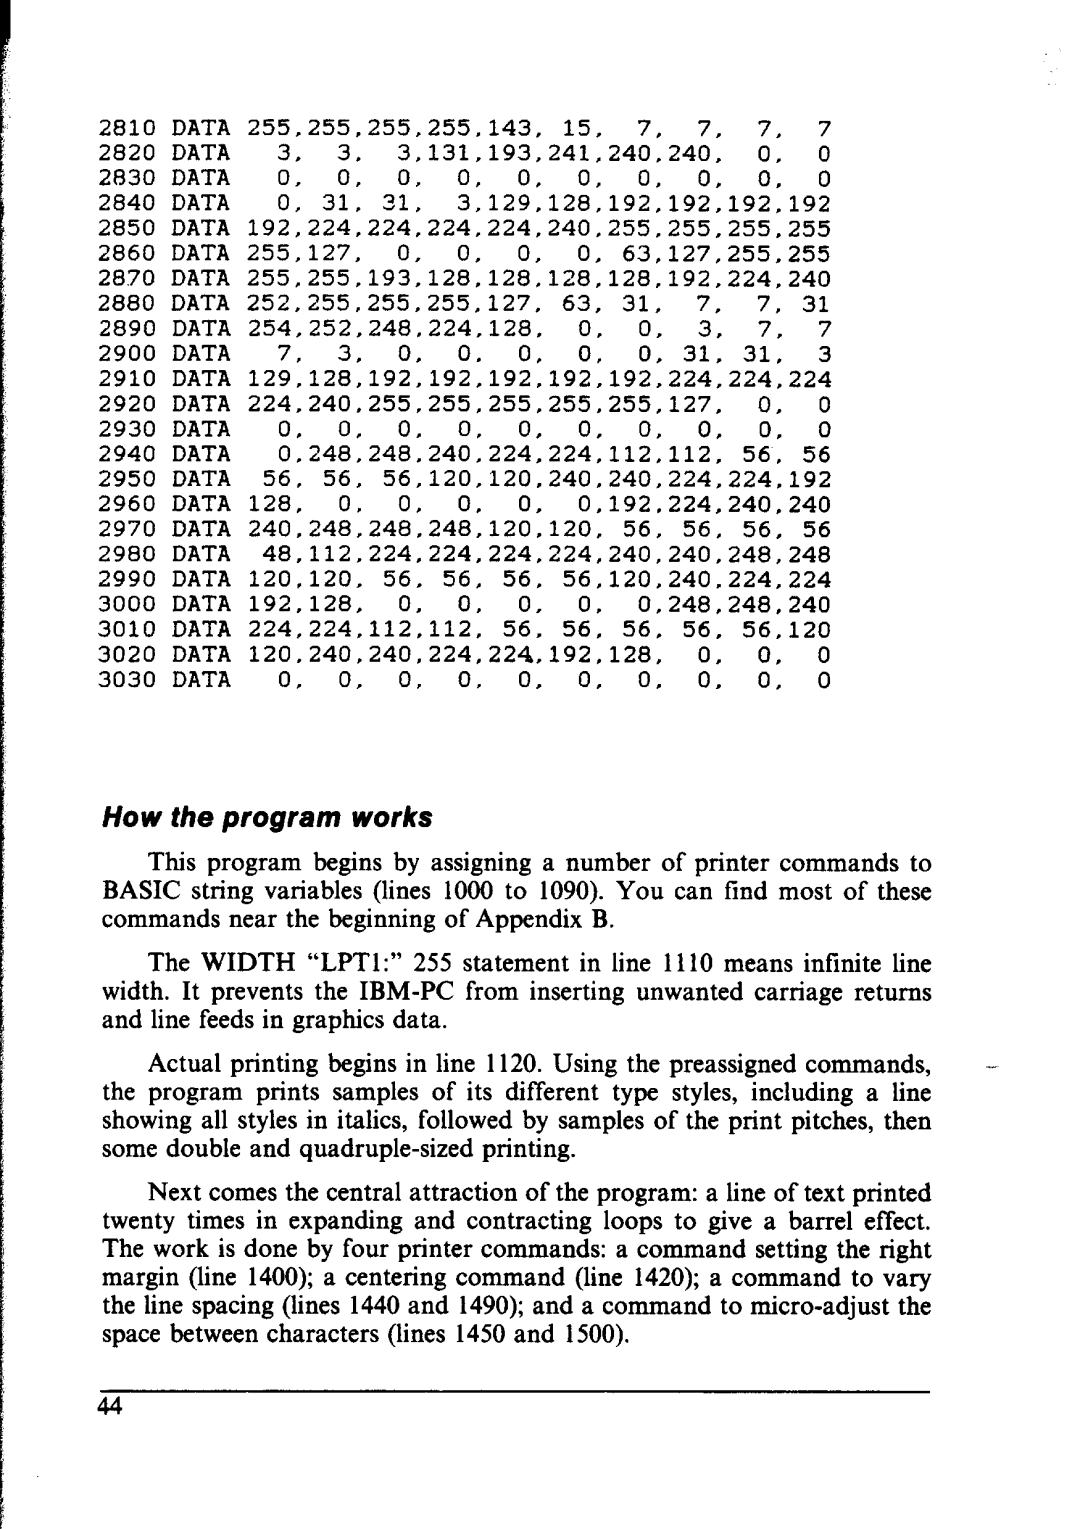 Star Micronics NX-1000 manual How the program works 